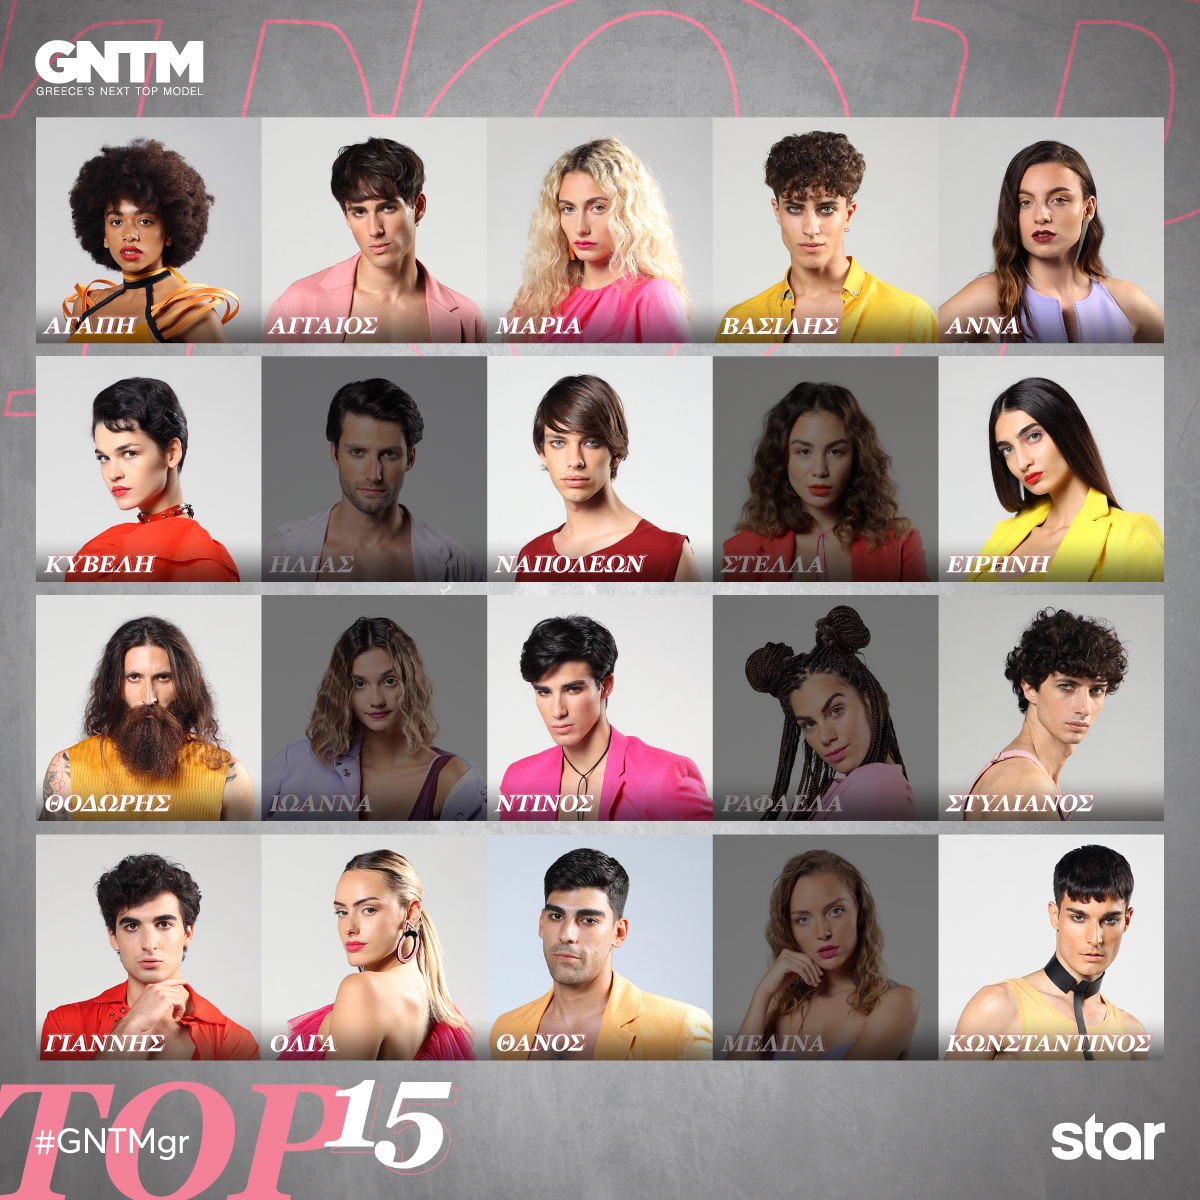 GNTM 4 TOP 15